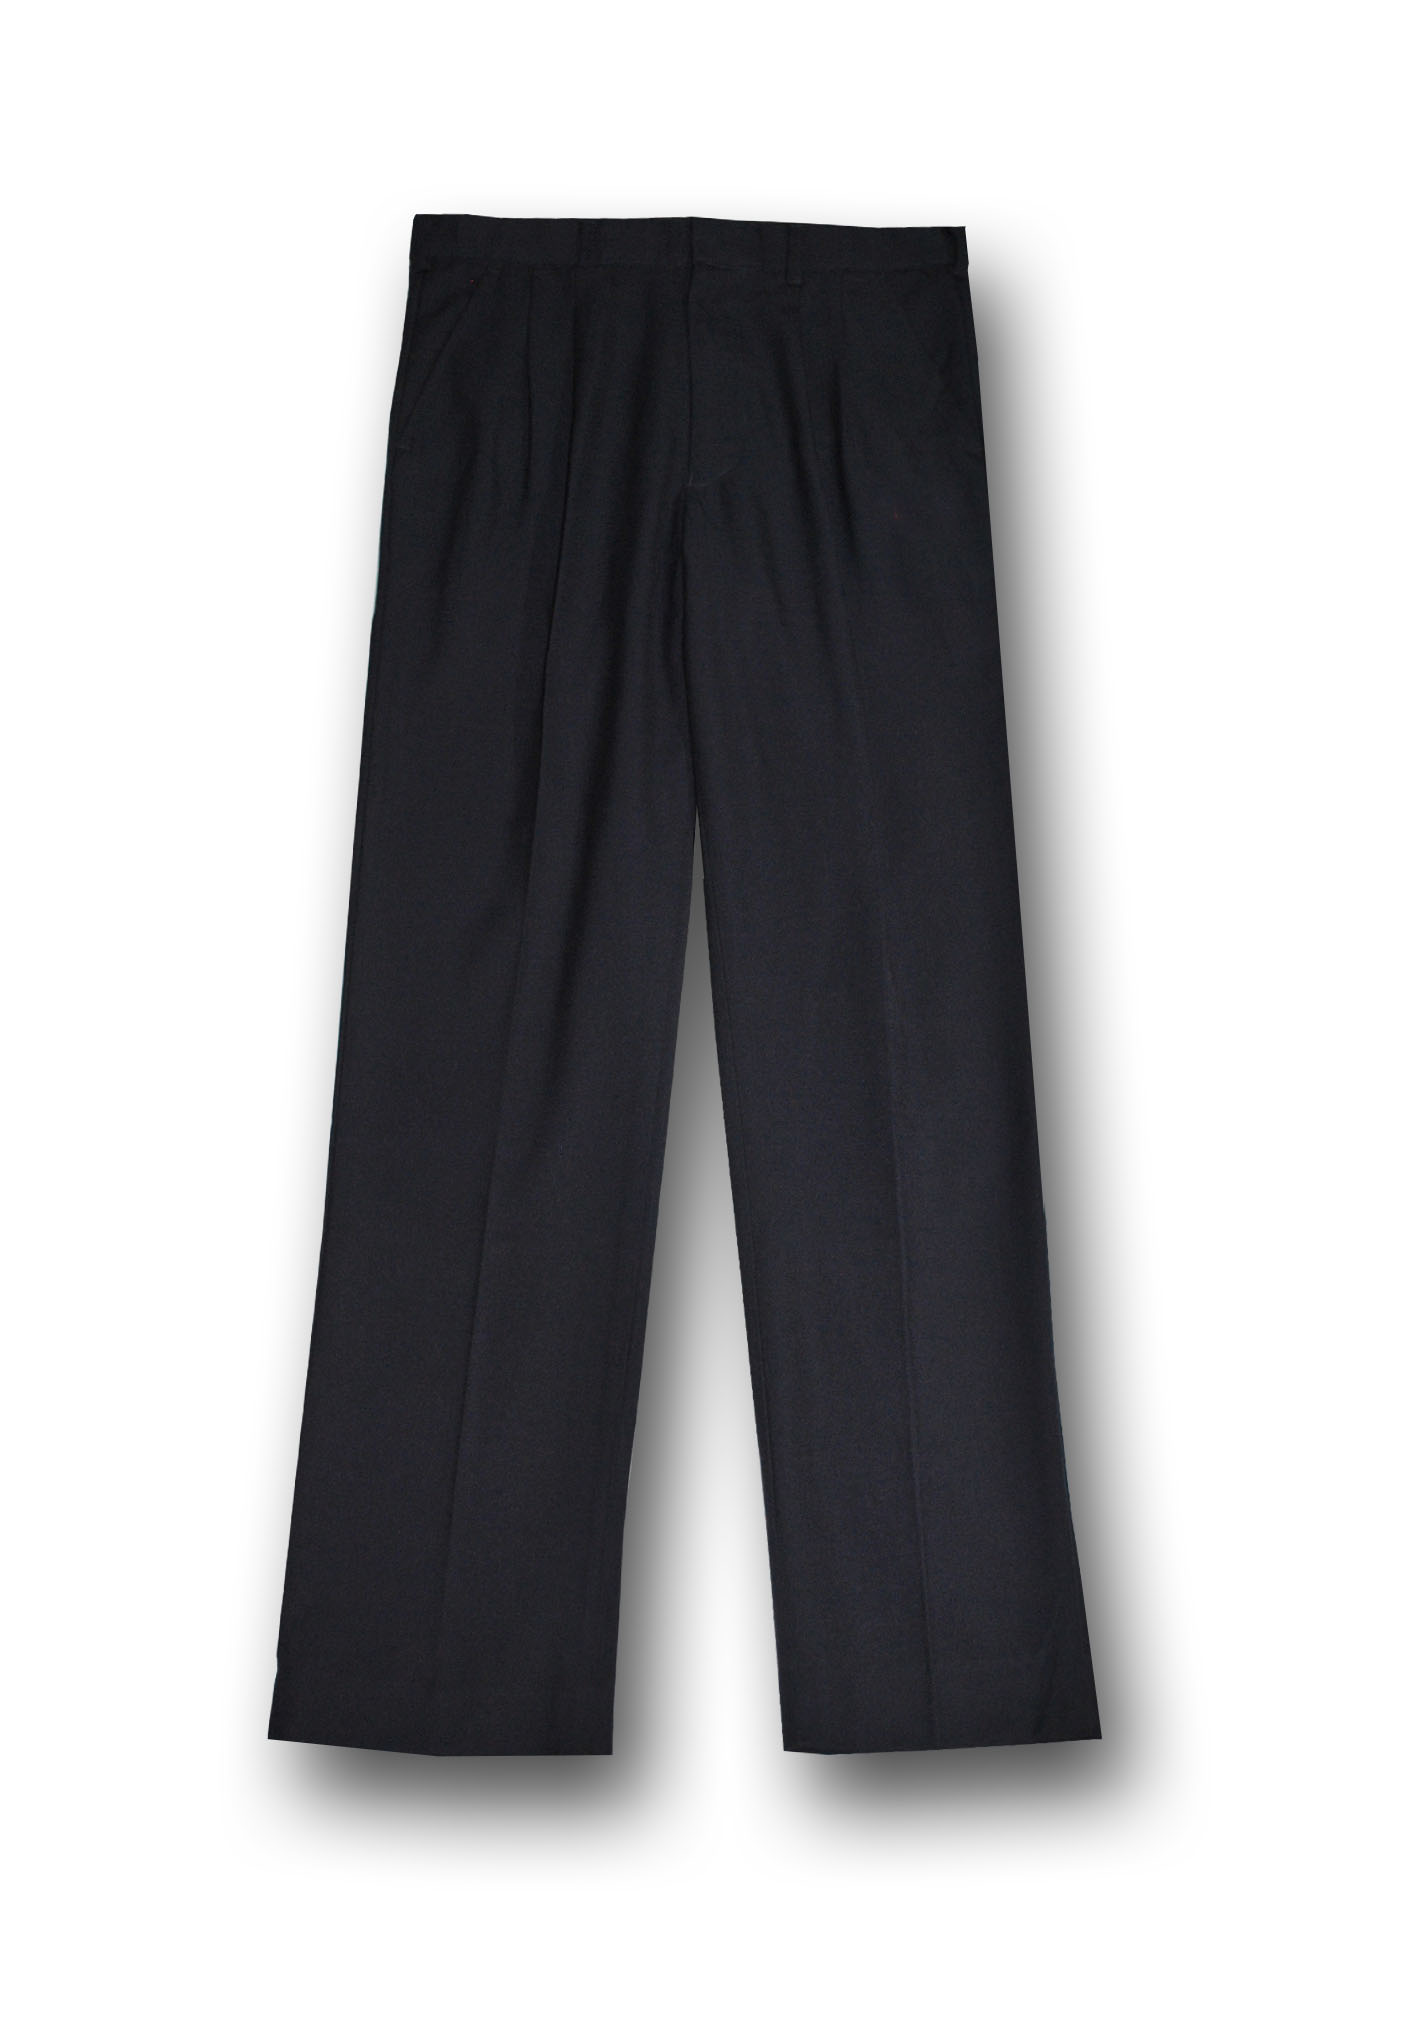 Ssc Blackwattle Boys Tailored Pants | Shop at Pickles Schoolwear ...